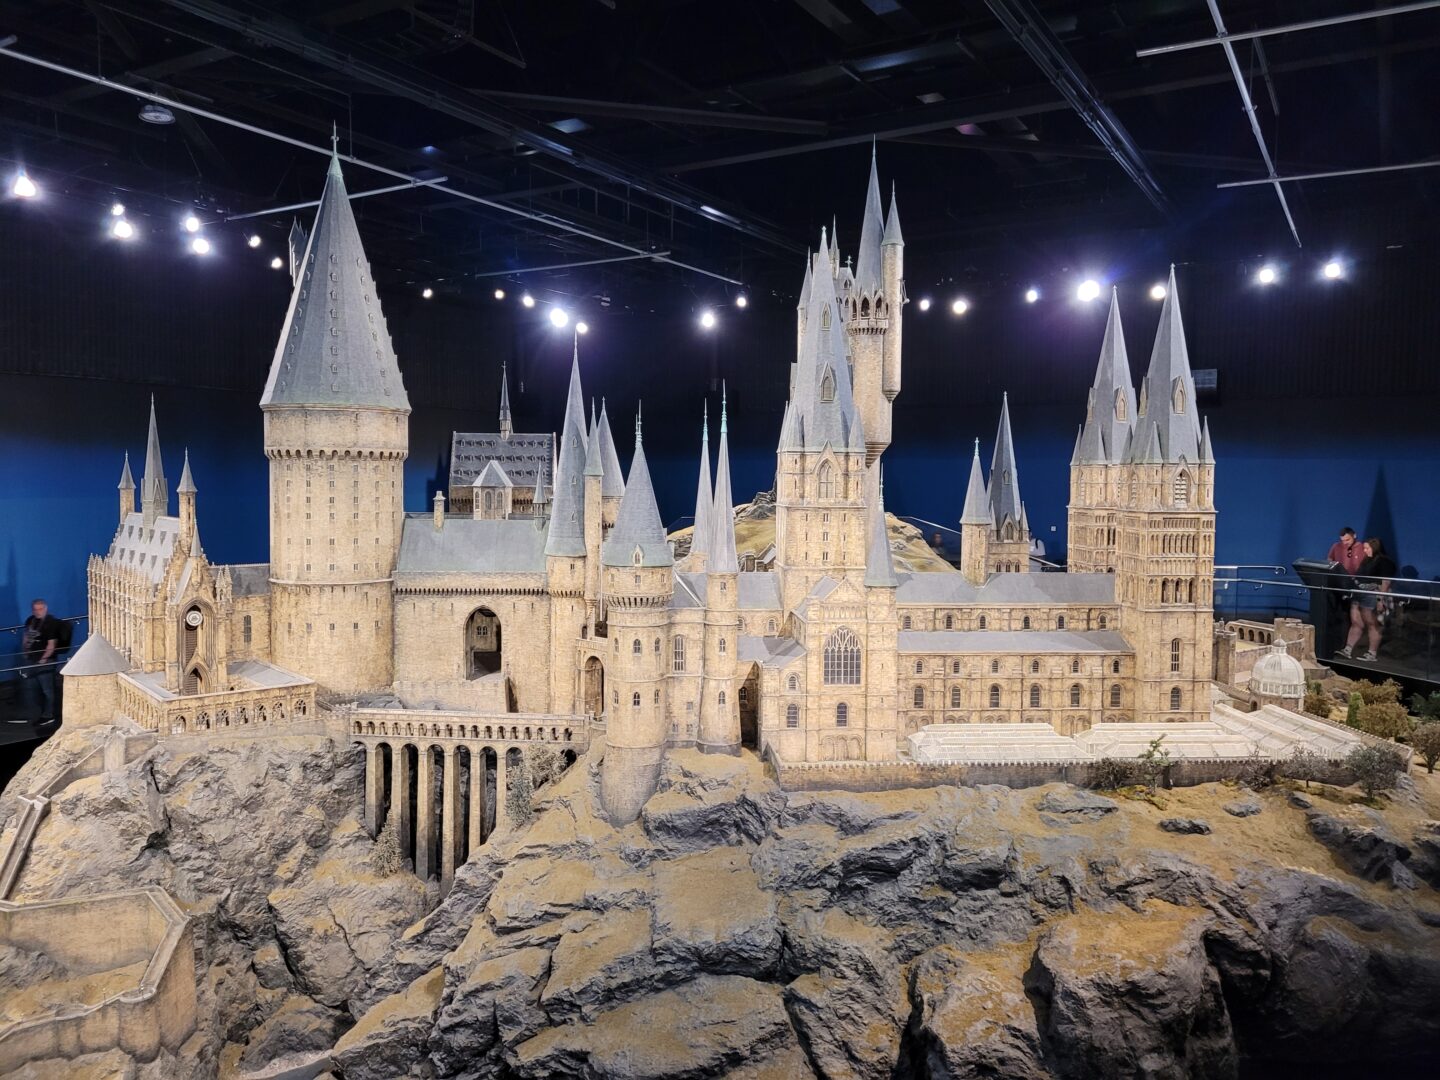 Hogwarts Castle in Harry Potter Studio's